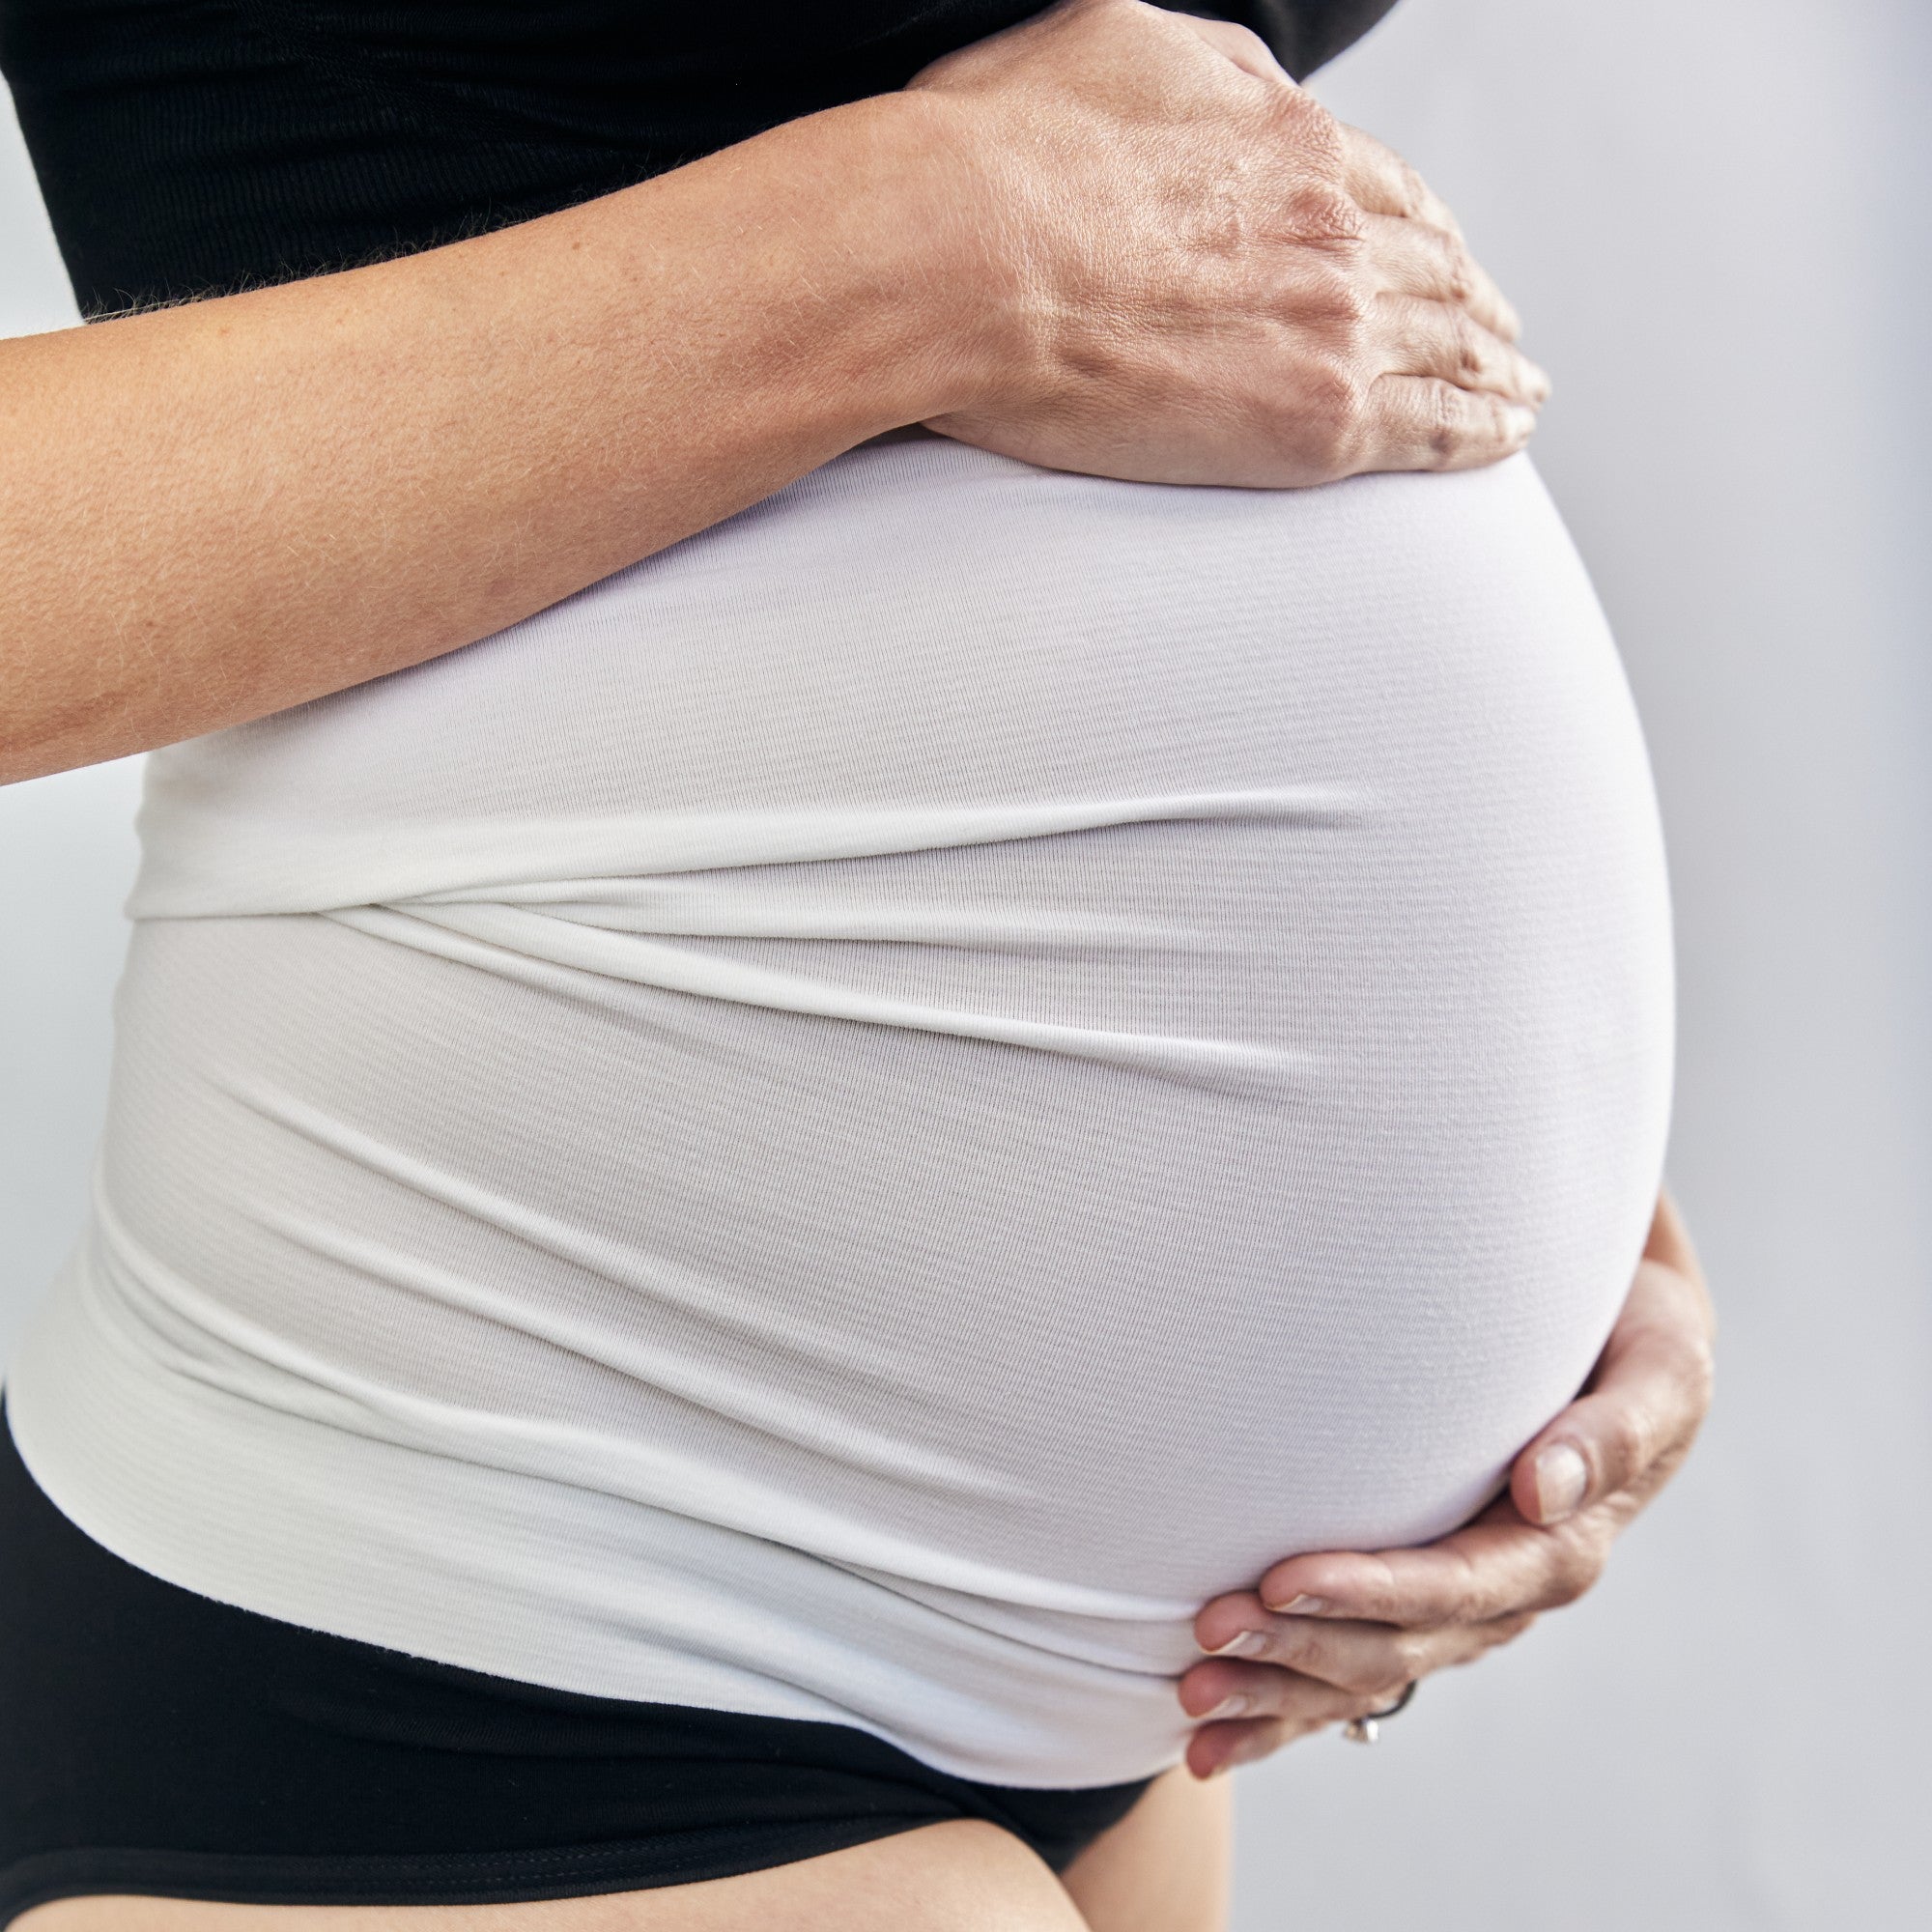 Belly Bands for Pregnant Women,Pregnancy Belly Support Band Belt